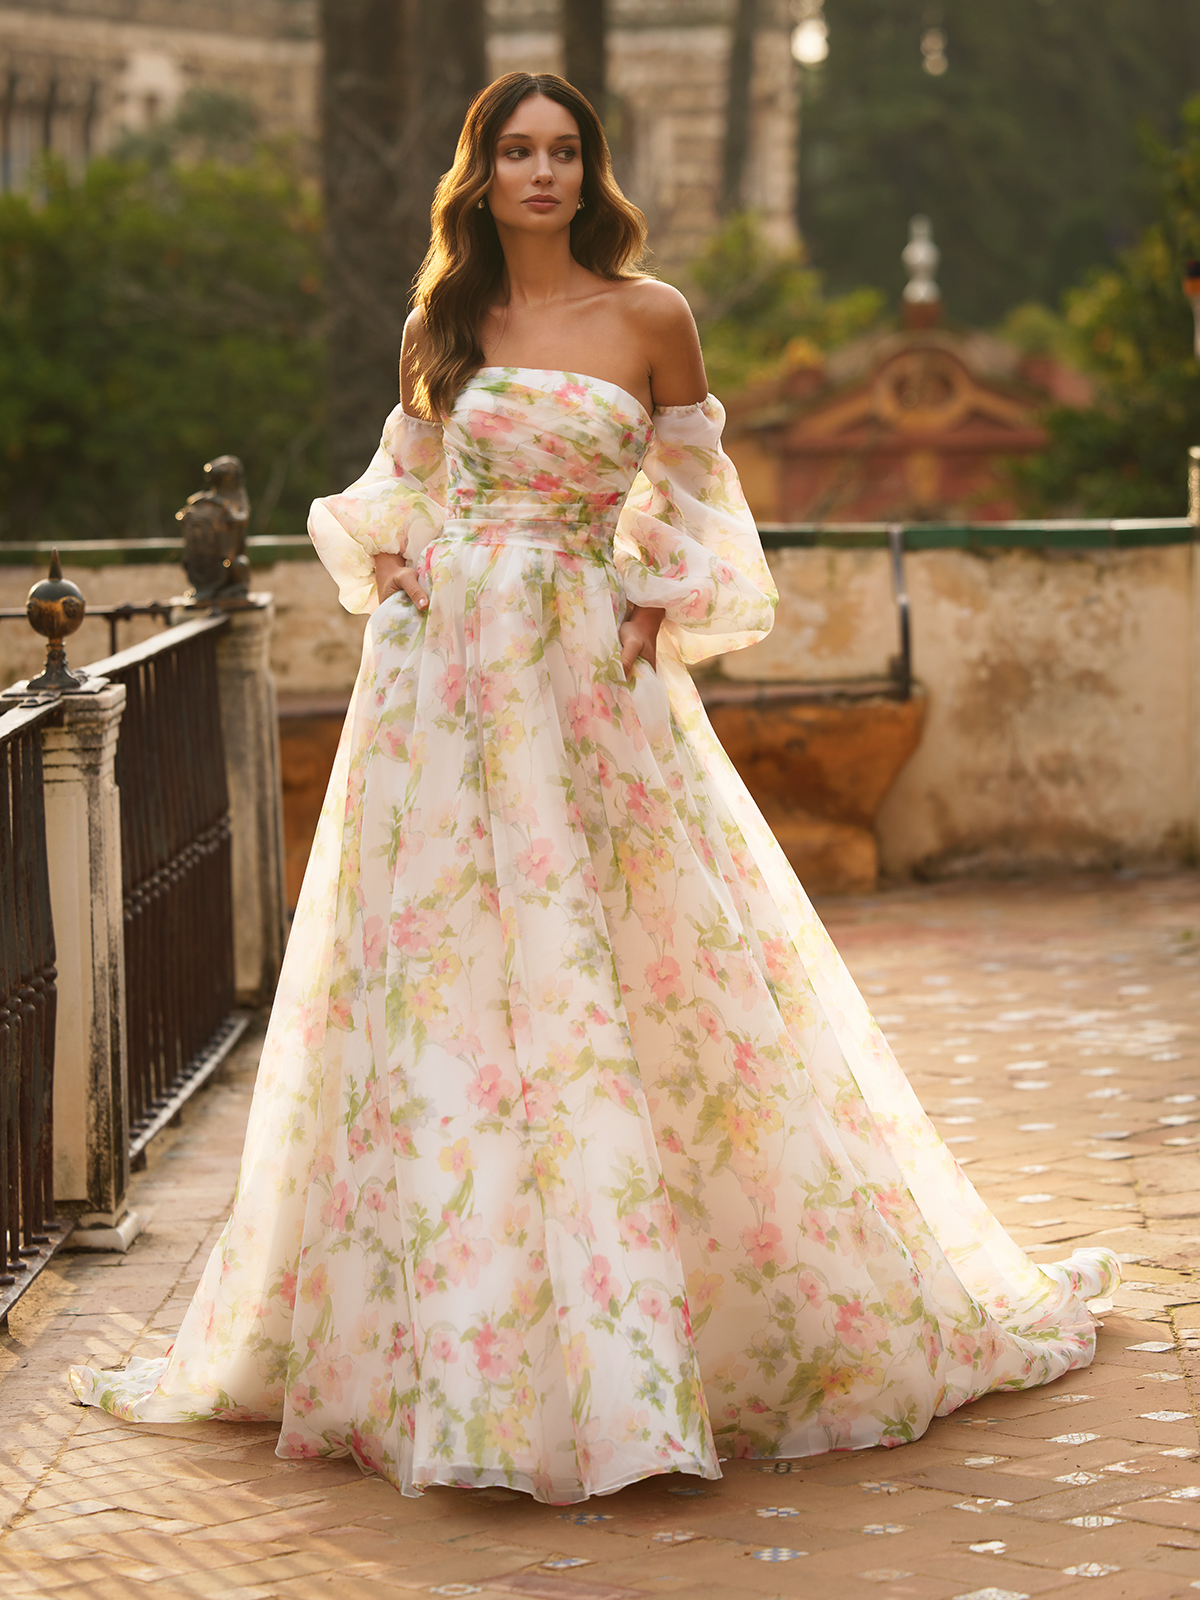 10 Non-Traditional Wedding Dresses - Unique Styles & Colors